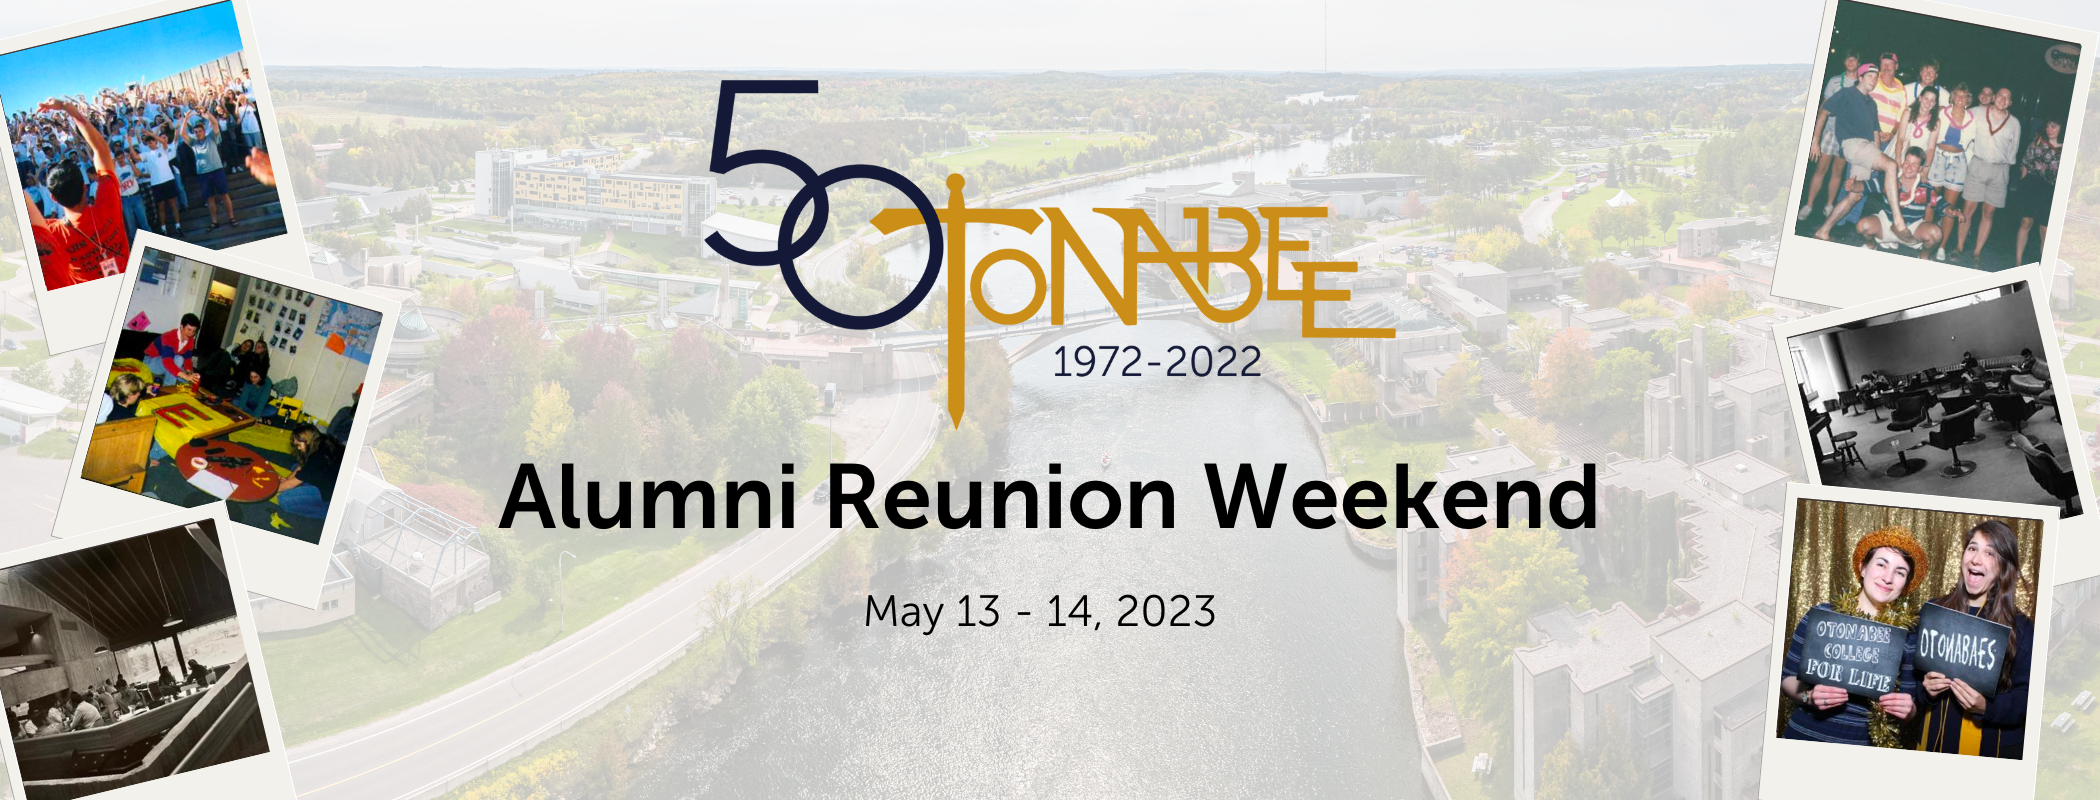 Alumni Reunion Weekend OC 50th